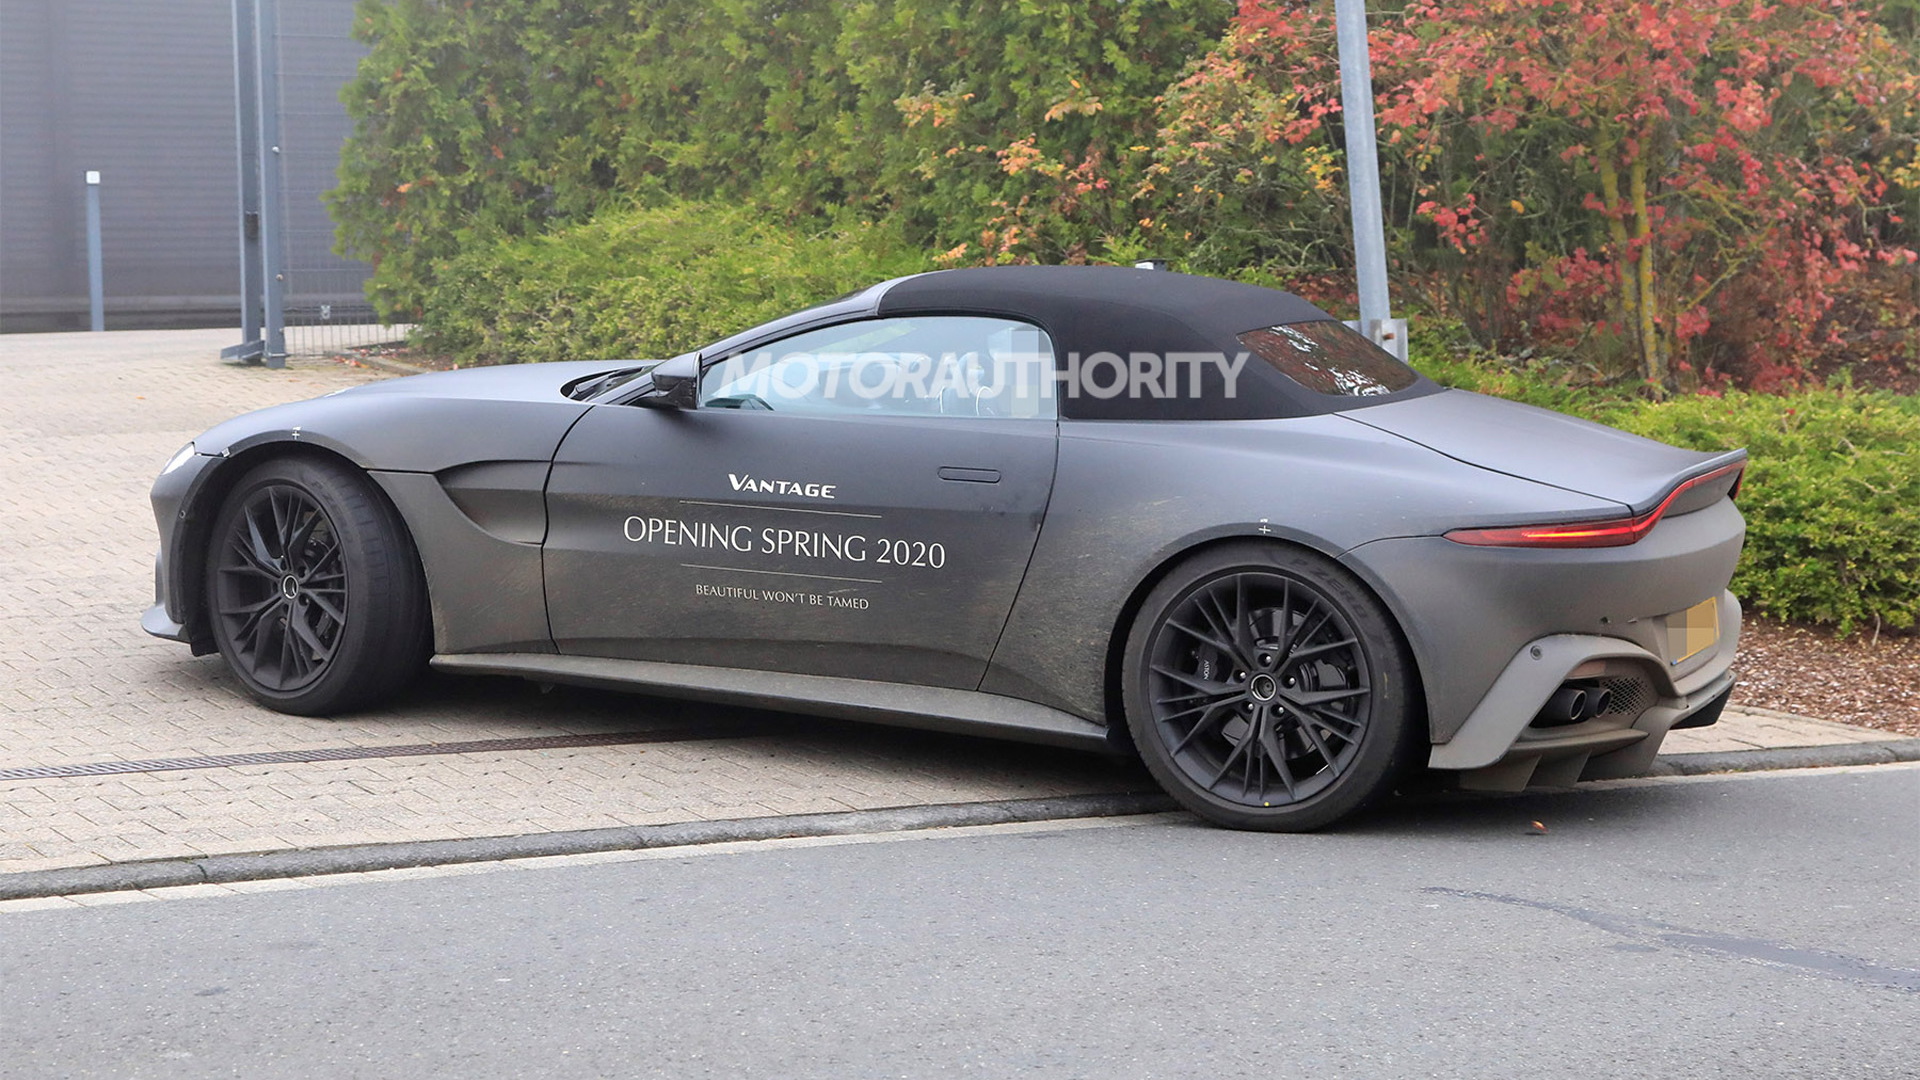 2020 Aston Martin Vantage Roadster spy shots - Photo credit: S. Baldauf/SB-Medien